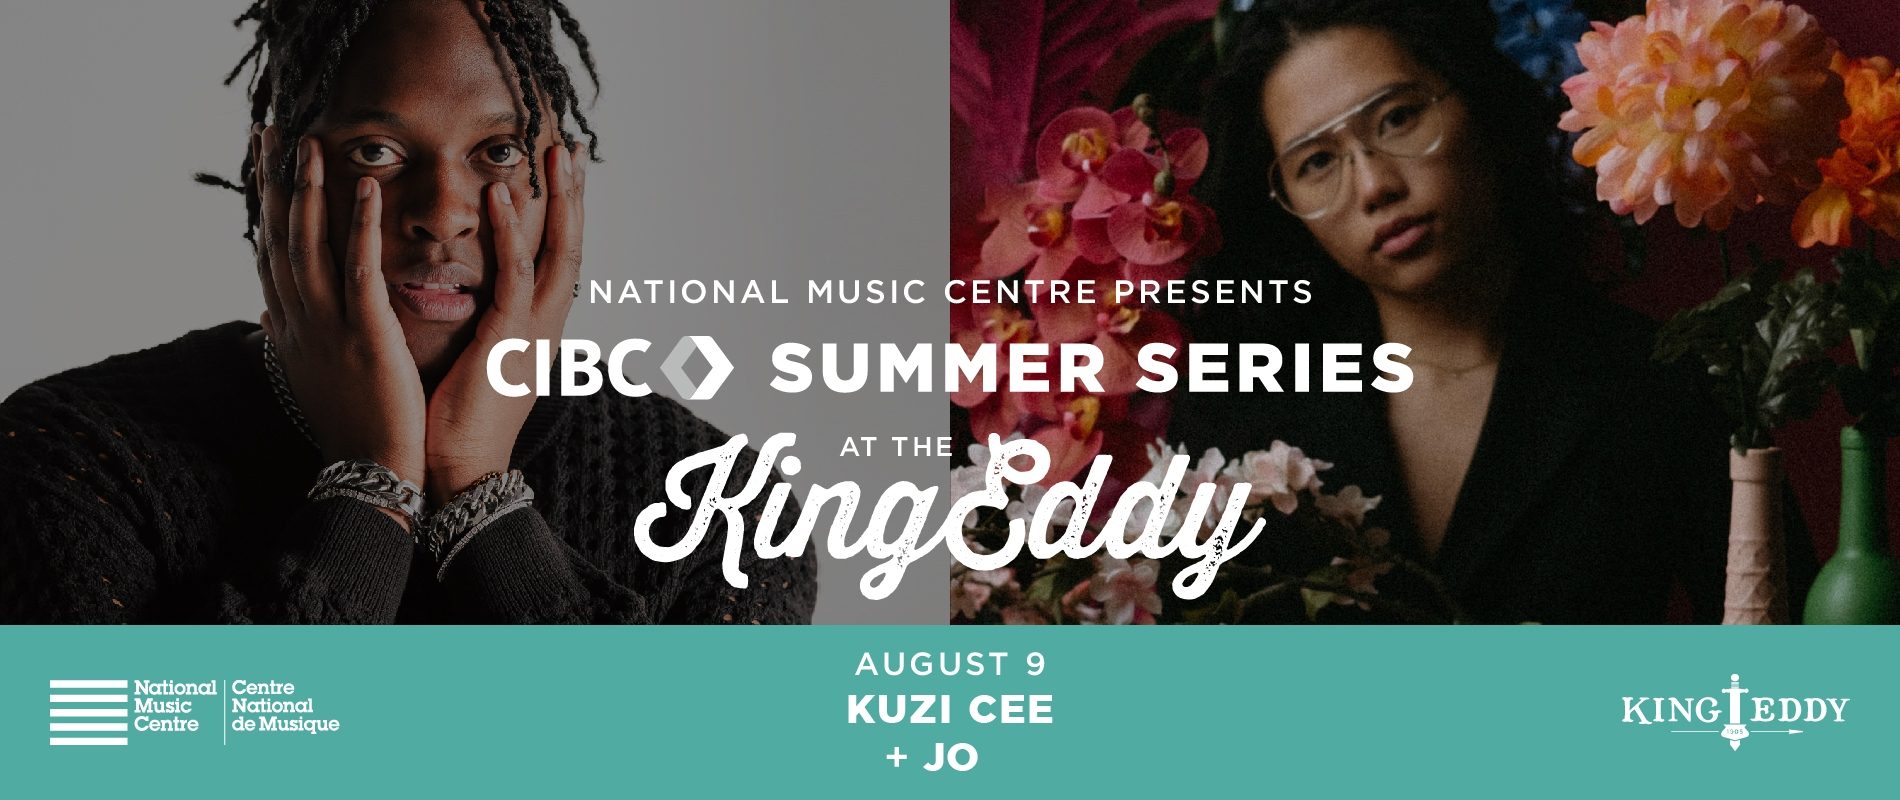 NMC Presents: CIBC Summer Series at the King Eddy — Kuzi Cee with jo.